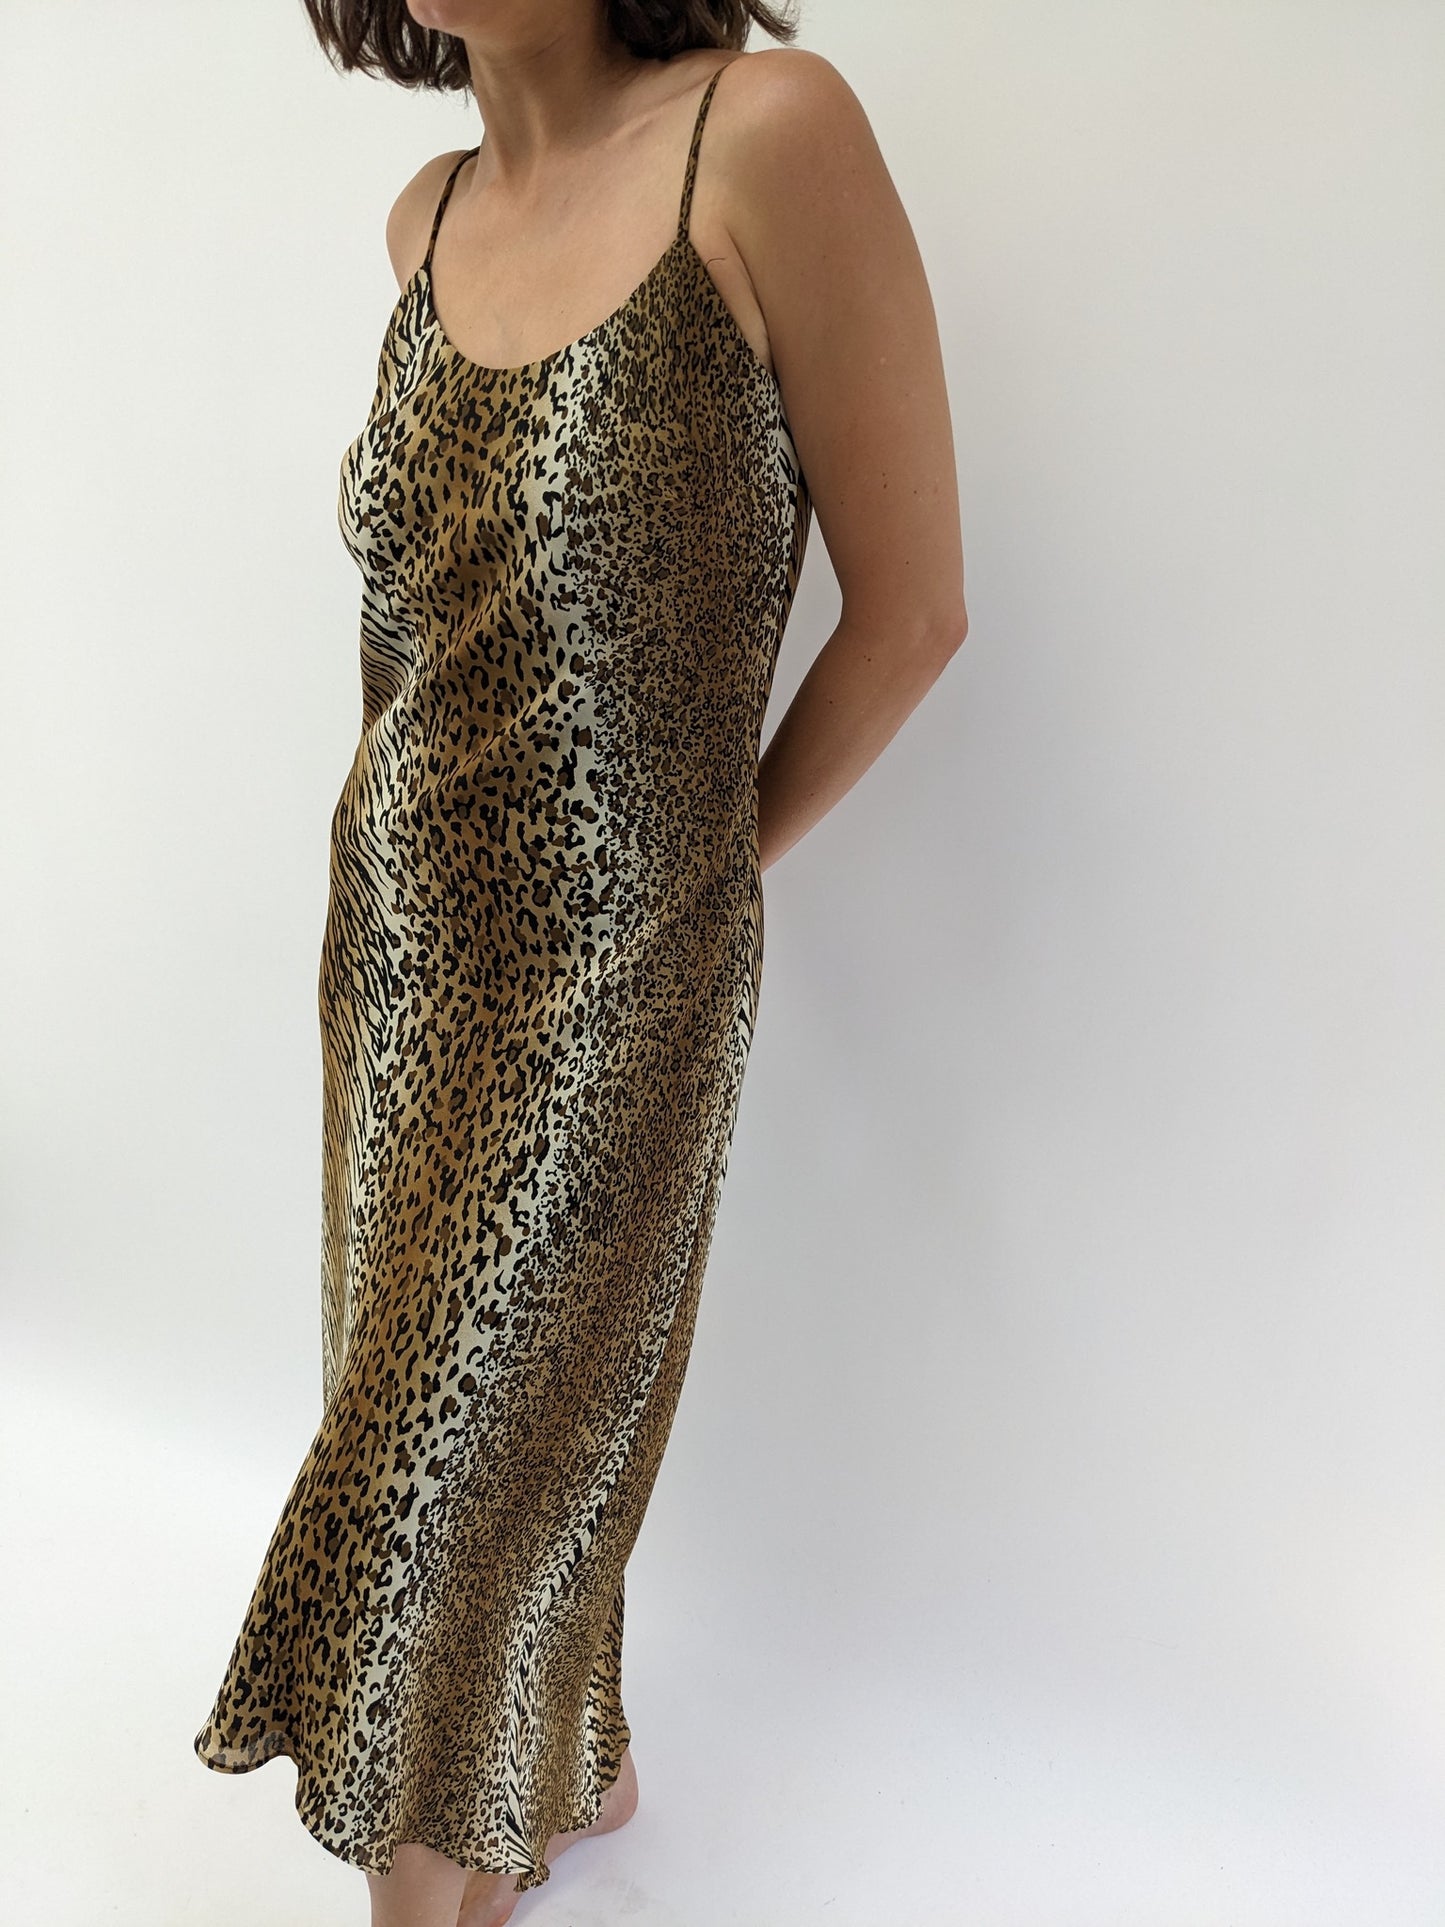 Stunning 90s Animal Printed Dress